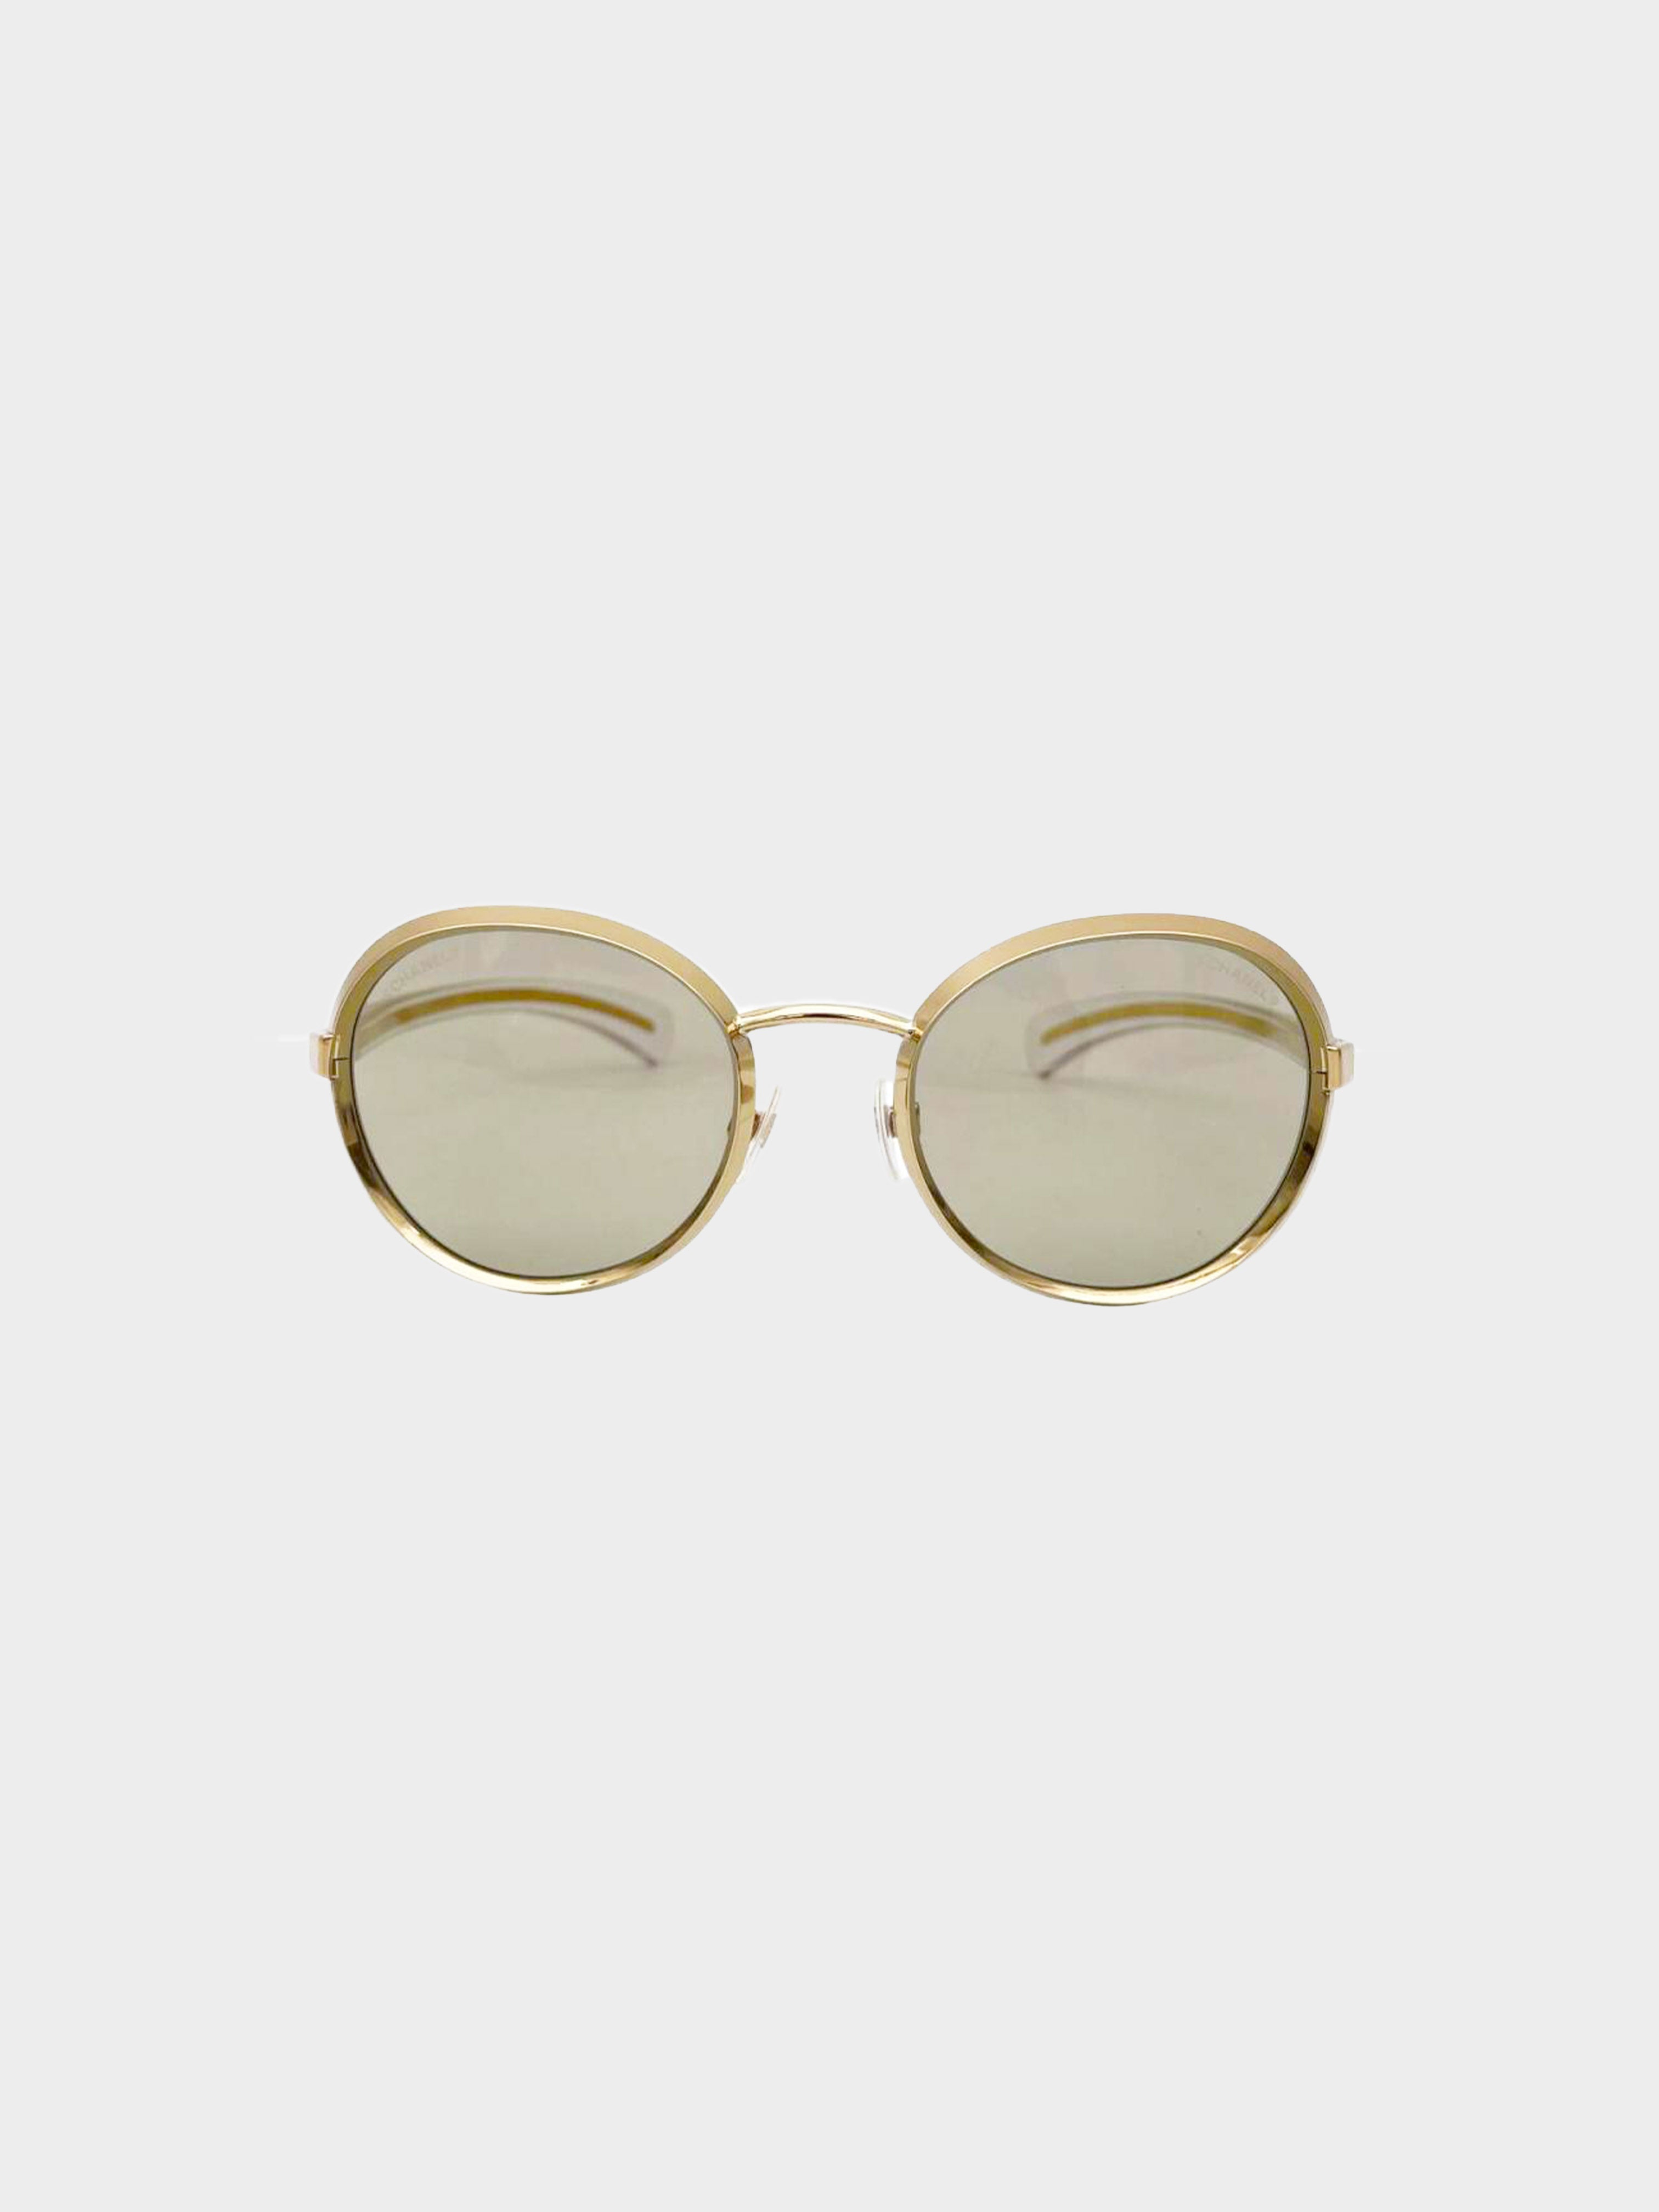 Chanel 2010s Gold Round Sunglasses · INTO